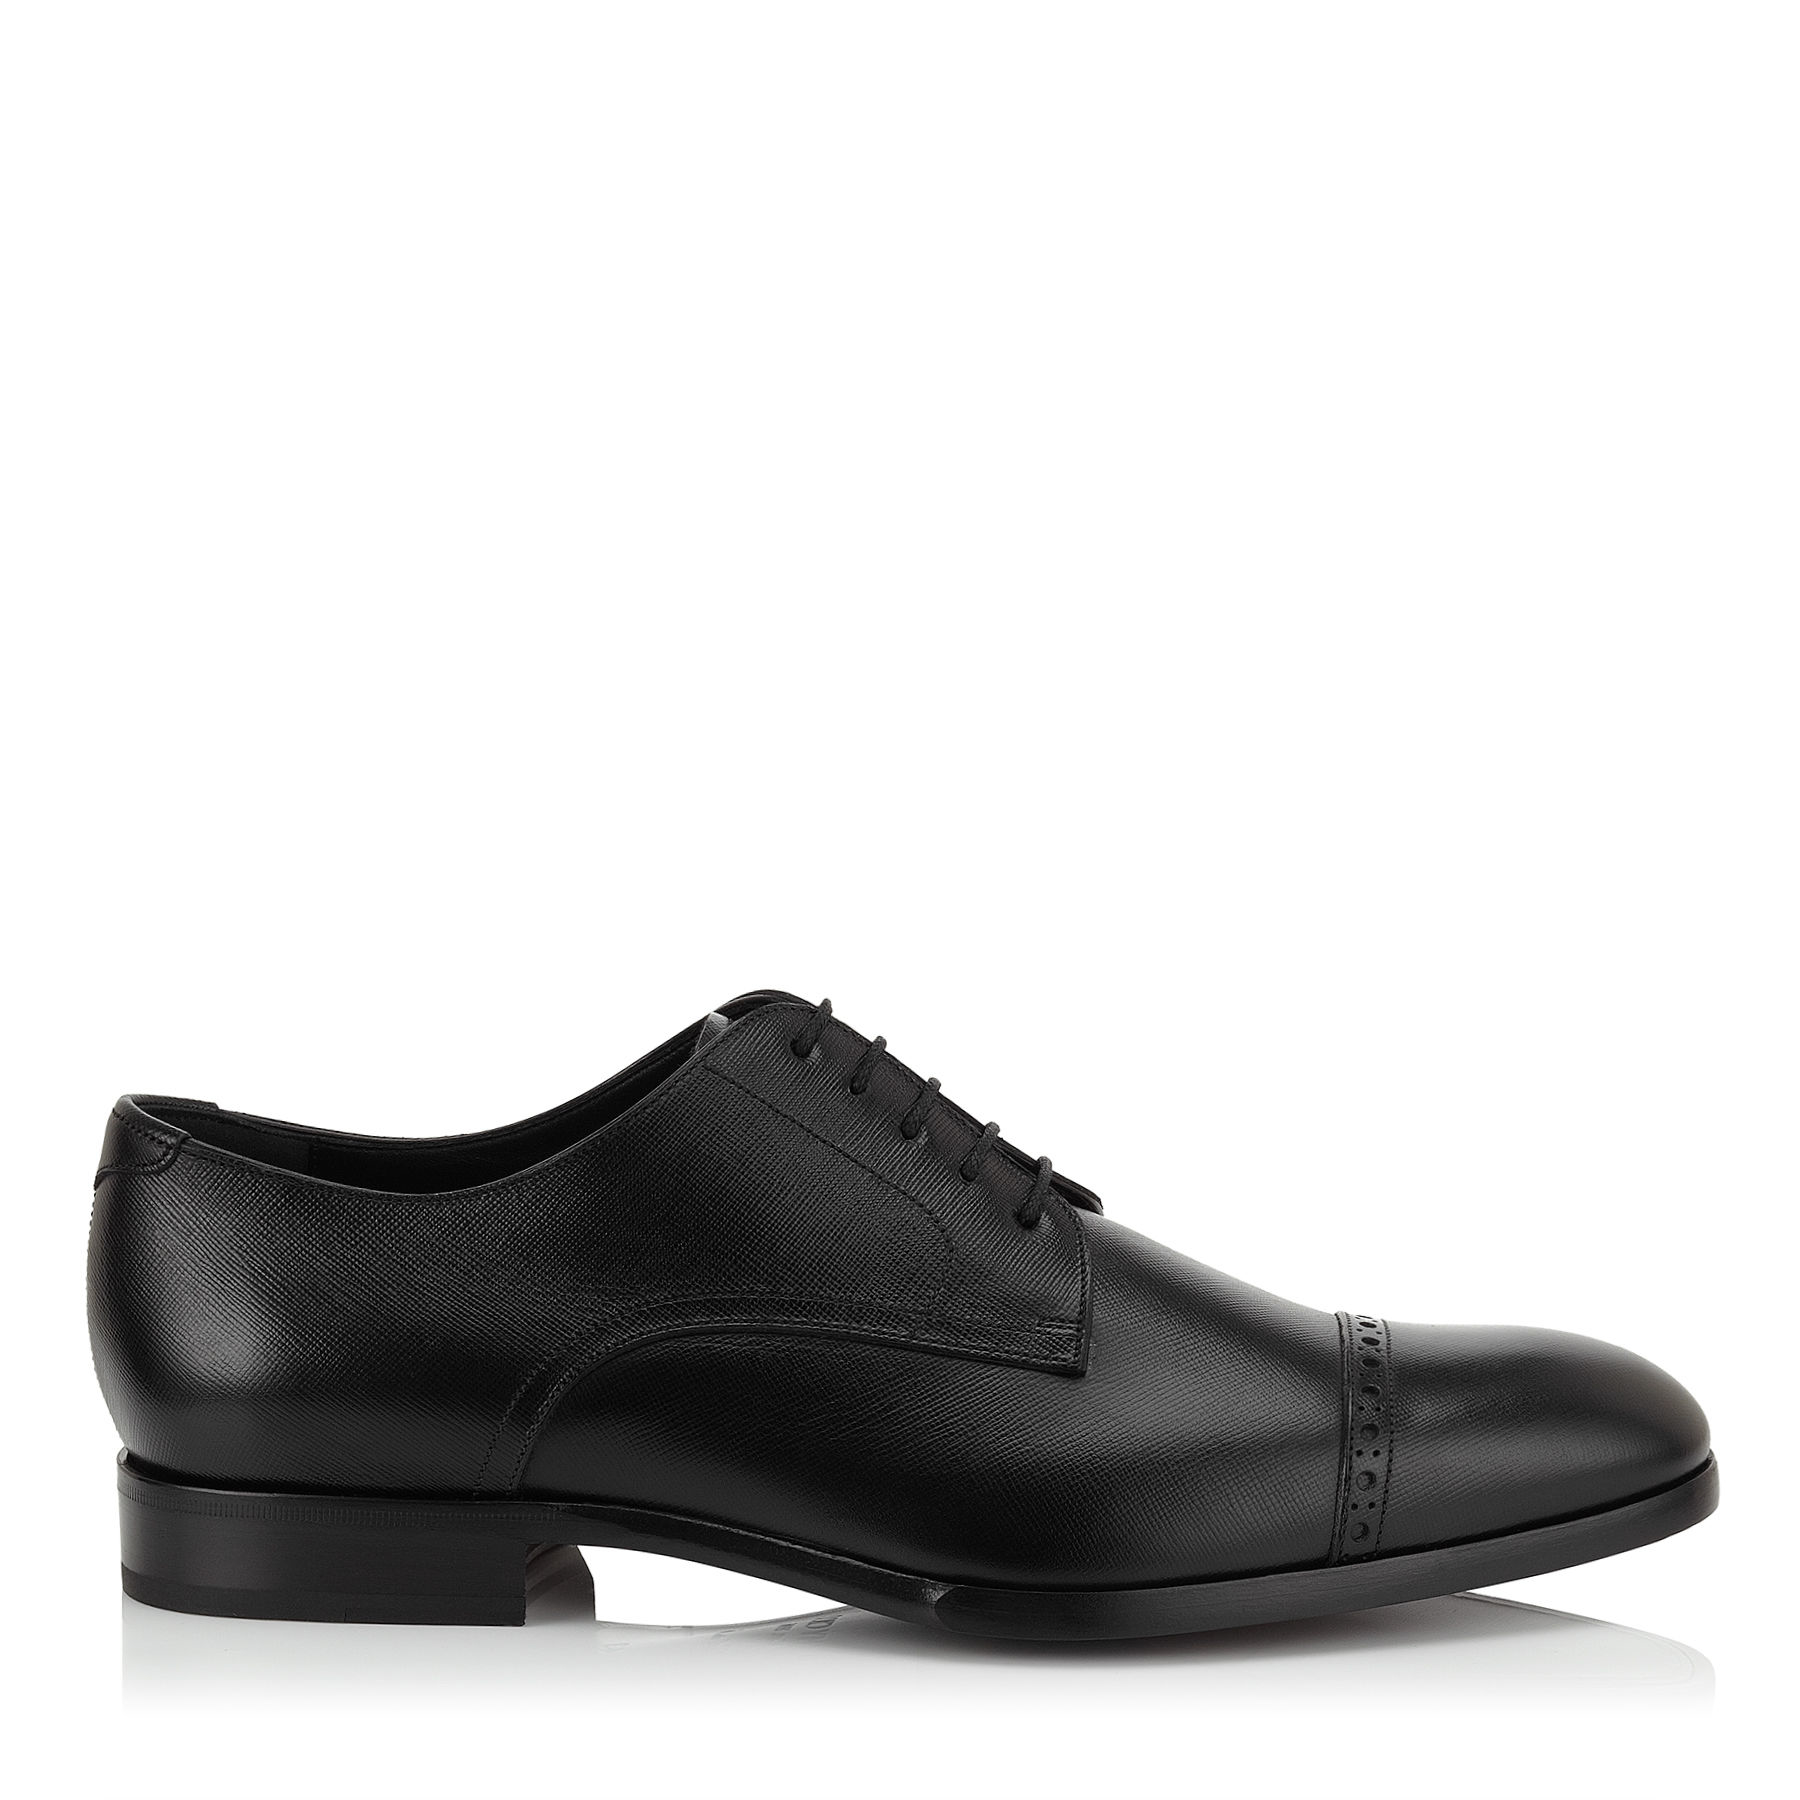 Lyst - Jimmy Choo Prescott Black Saffiano Lace Up Shoes in Black for Men